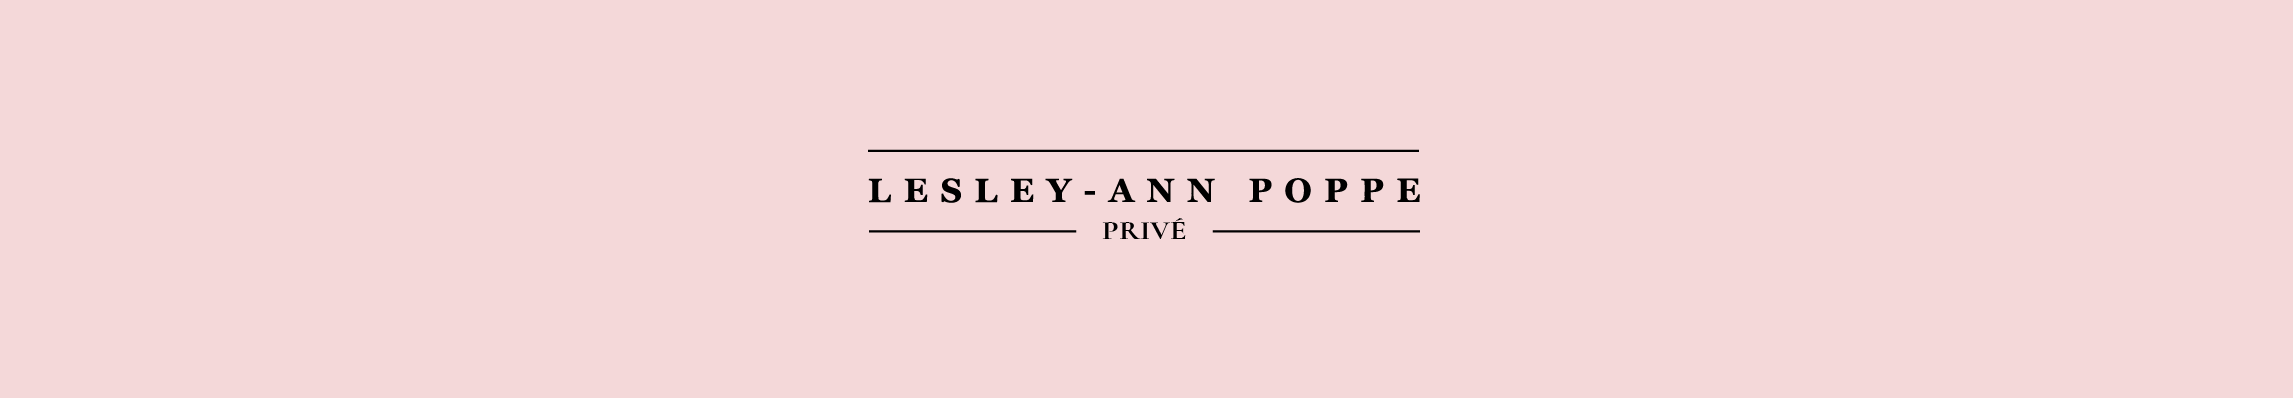 Lesley Ann Poppe (Prive)